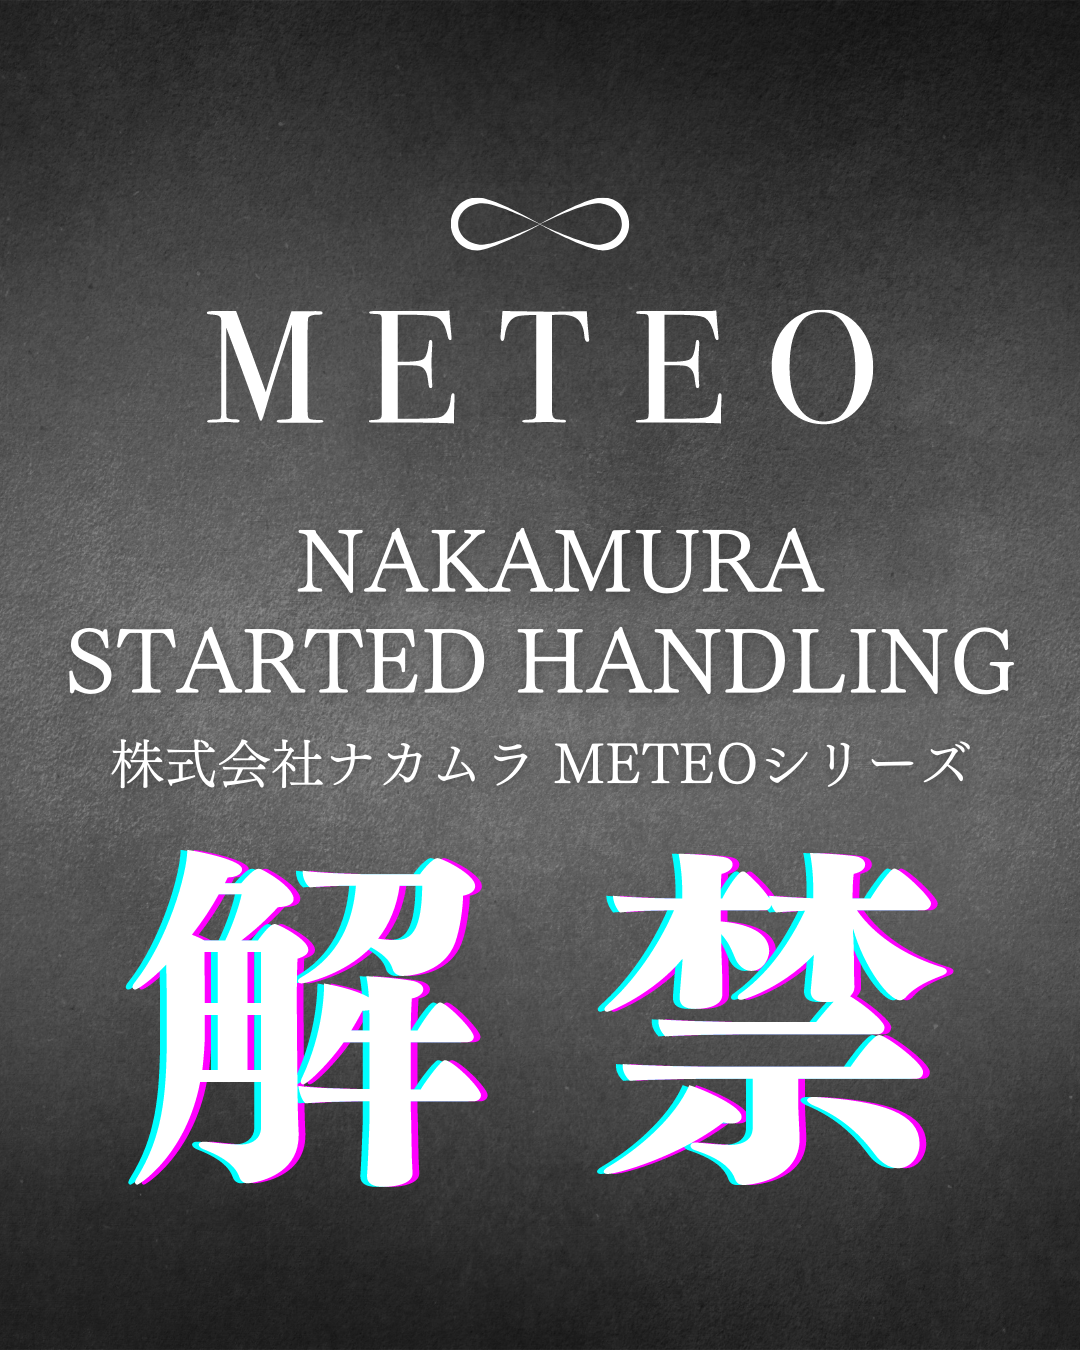 【METEO】株式会社ナカムラ『METEO』取り扱い開始のご案内